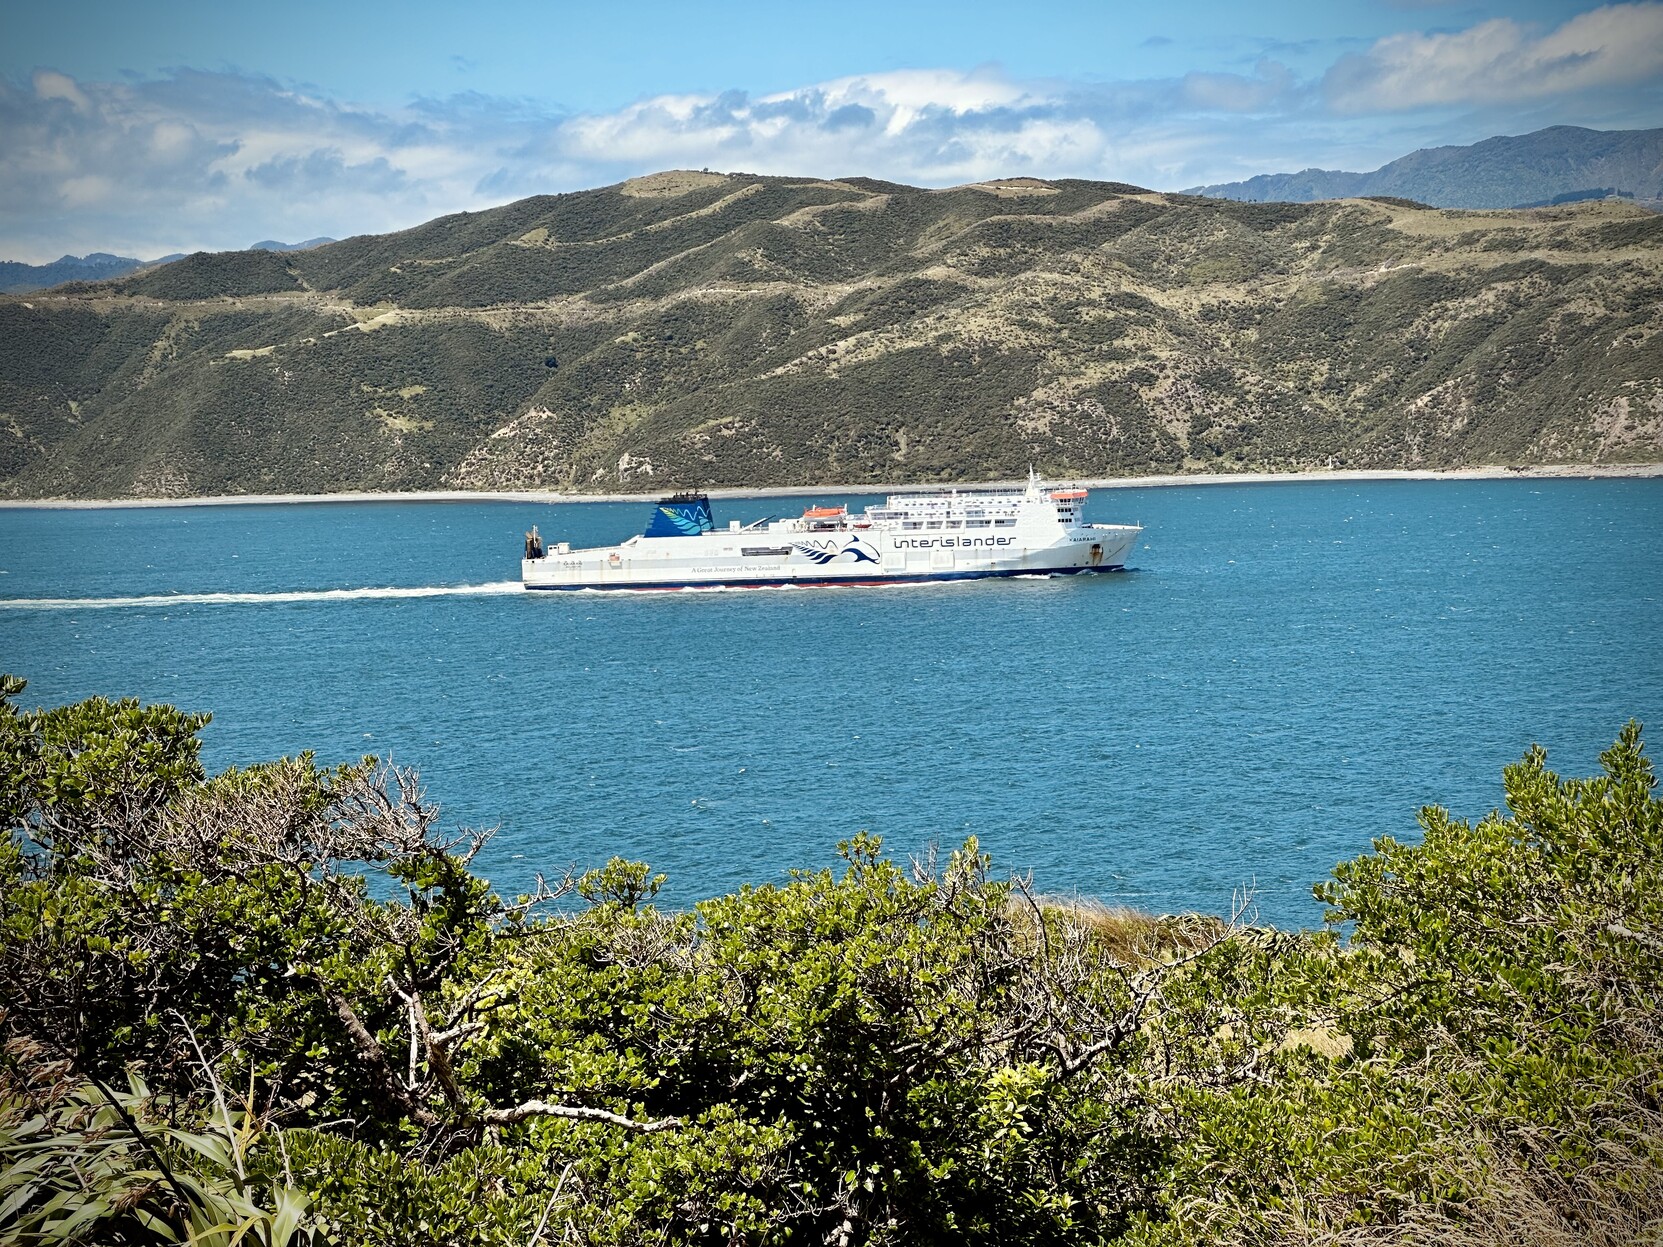 The Interislander ferry, leaving Wellington harbour